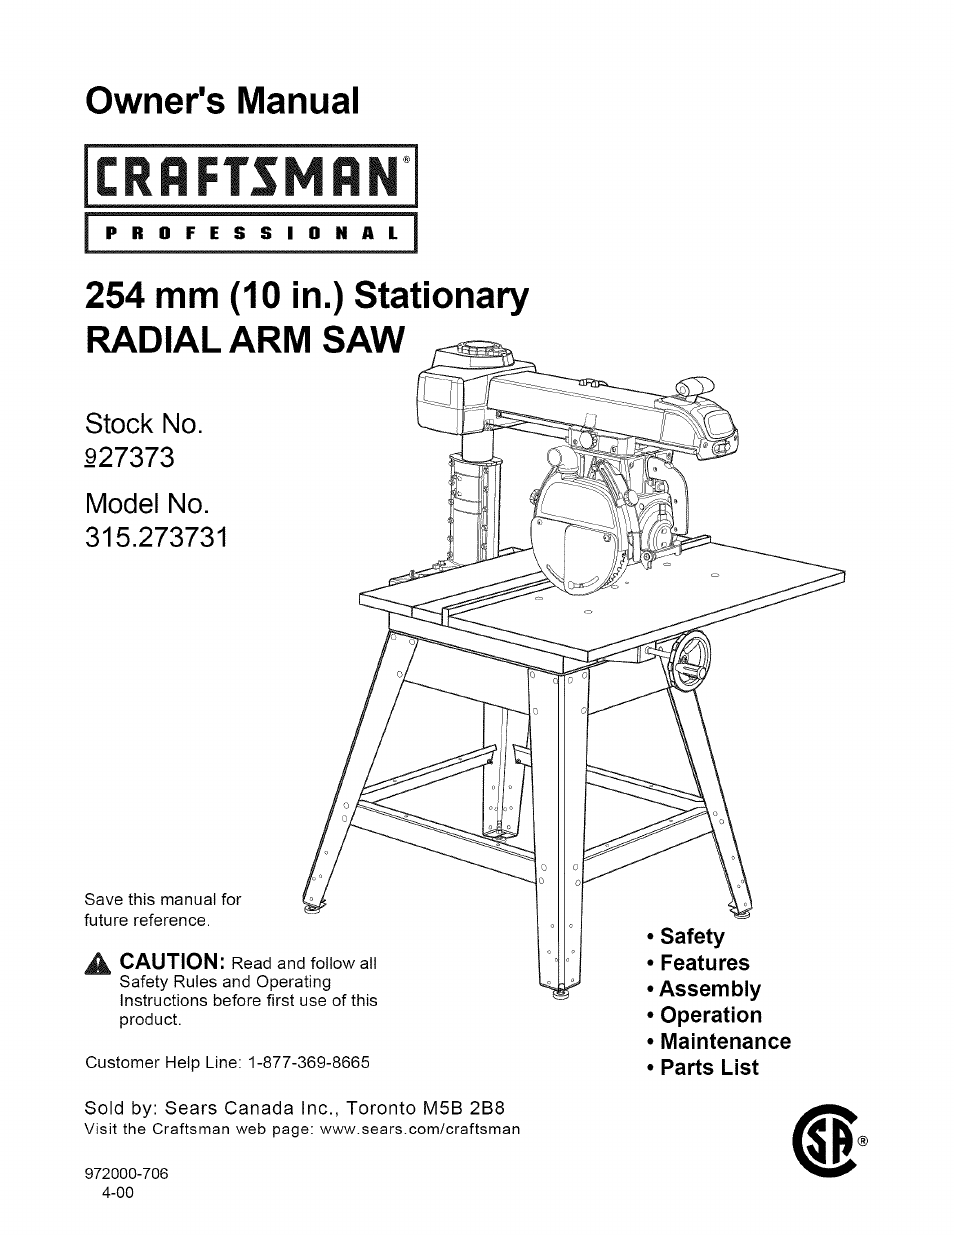 Craftsman 315.273731 User Manual | 80 pages | Original mode